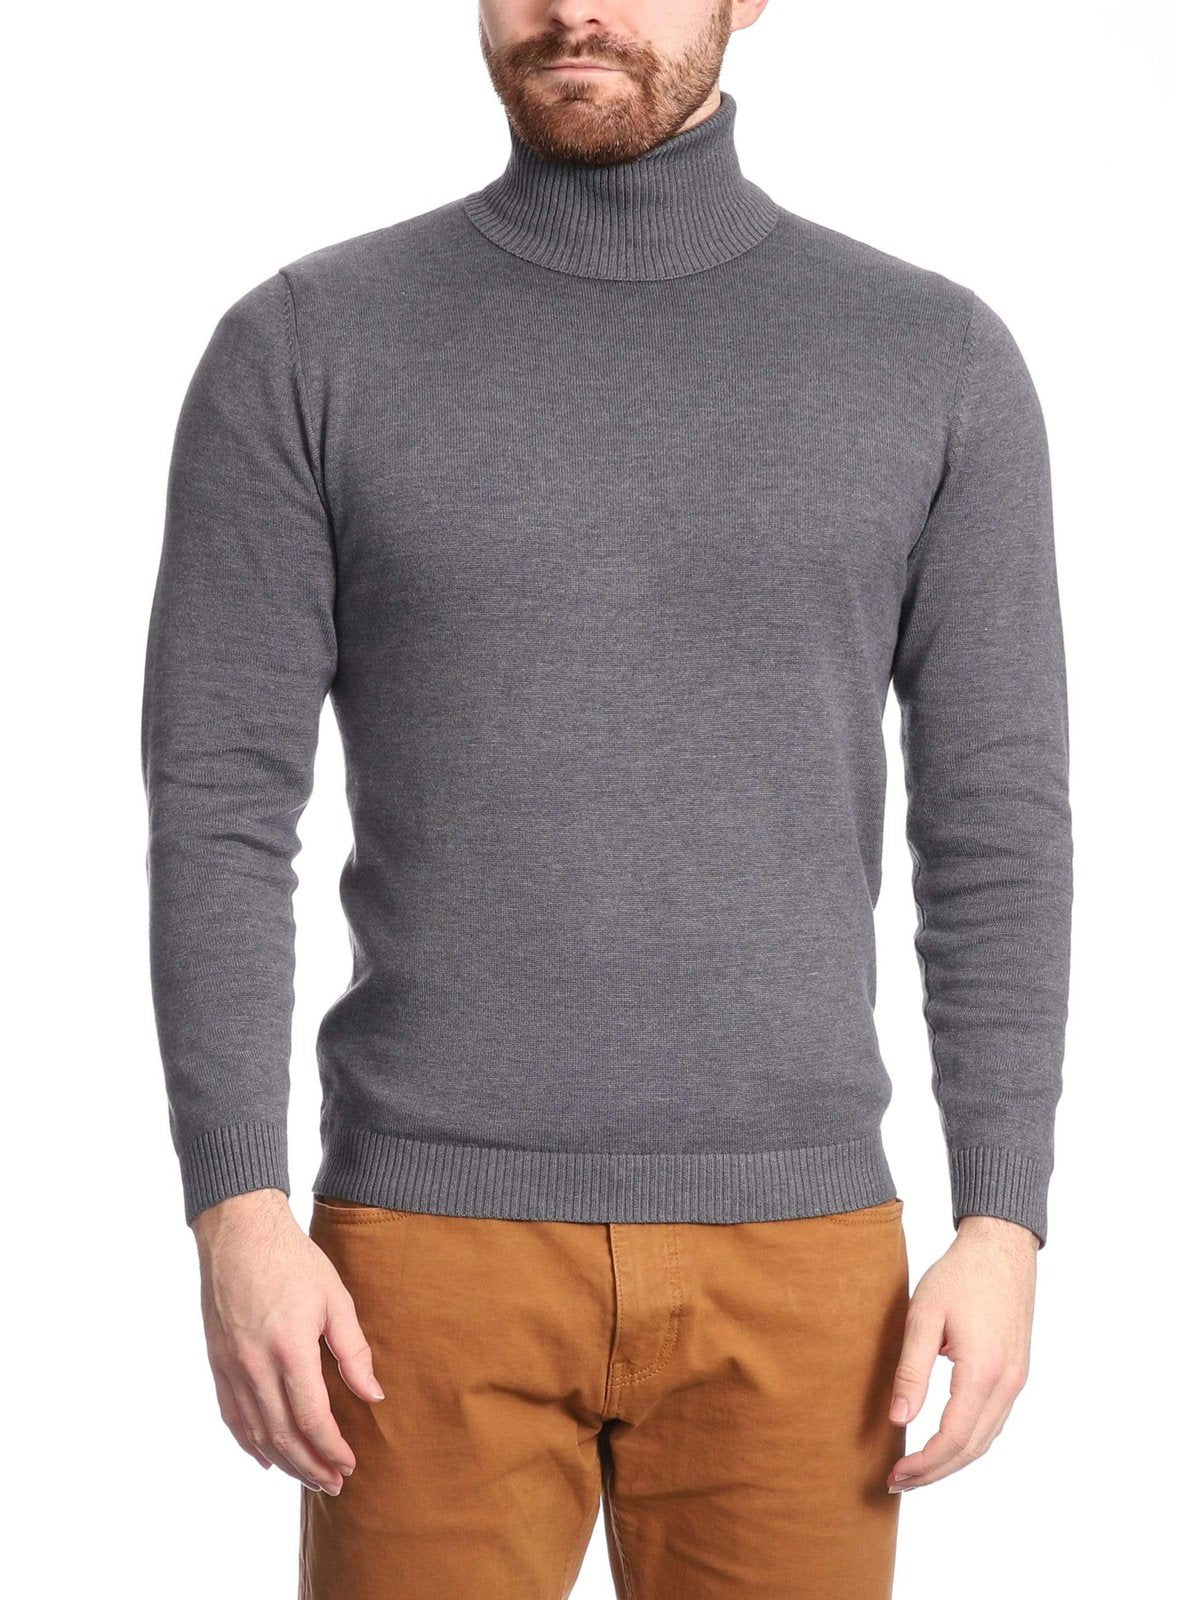 Arthur Black SWEATERS Arthur Black Men's Solid Light Gray Pullover Cotton Blend Turtleneck Sweater Shirt